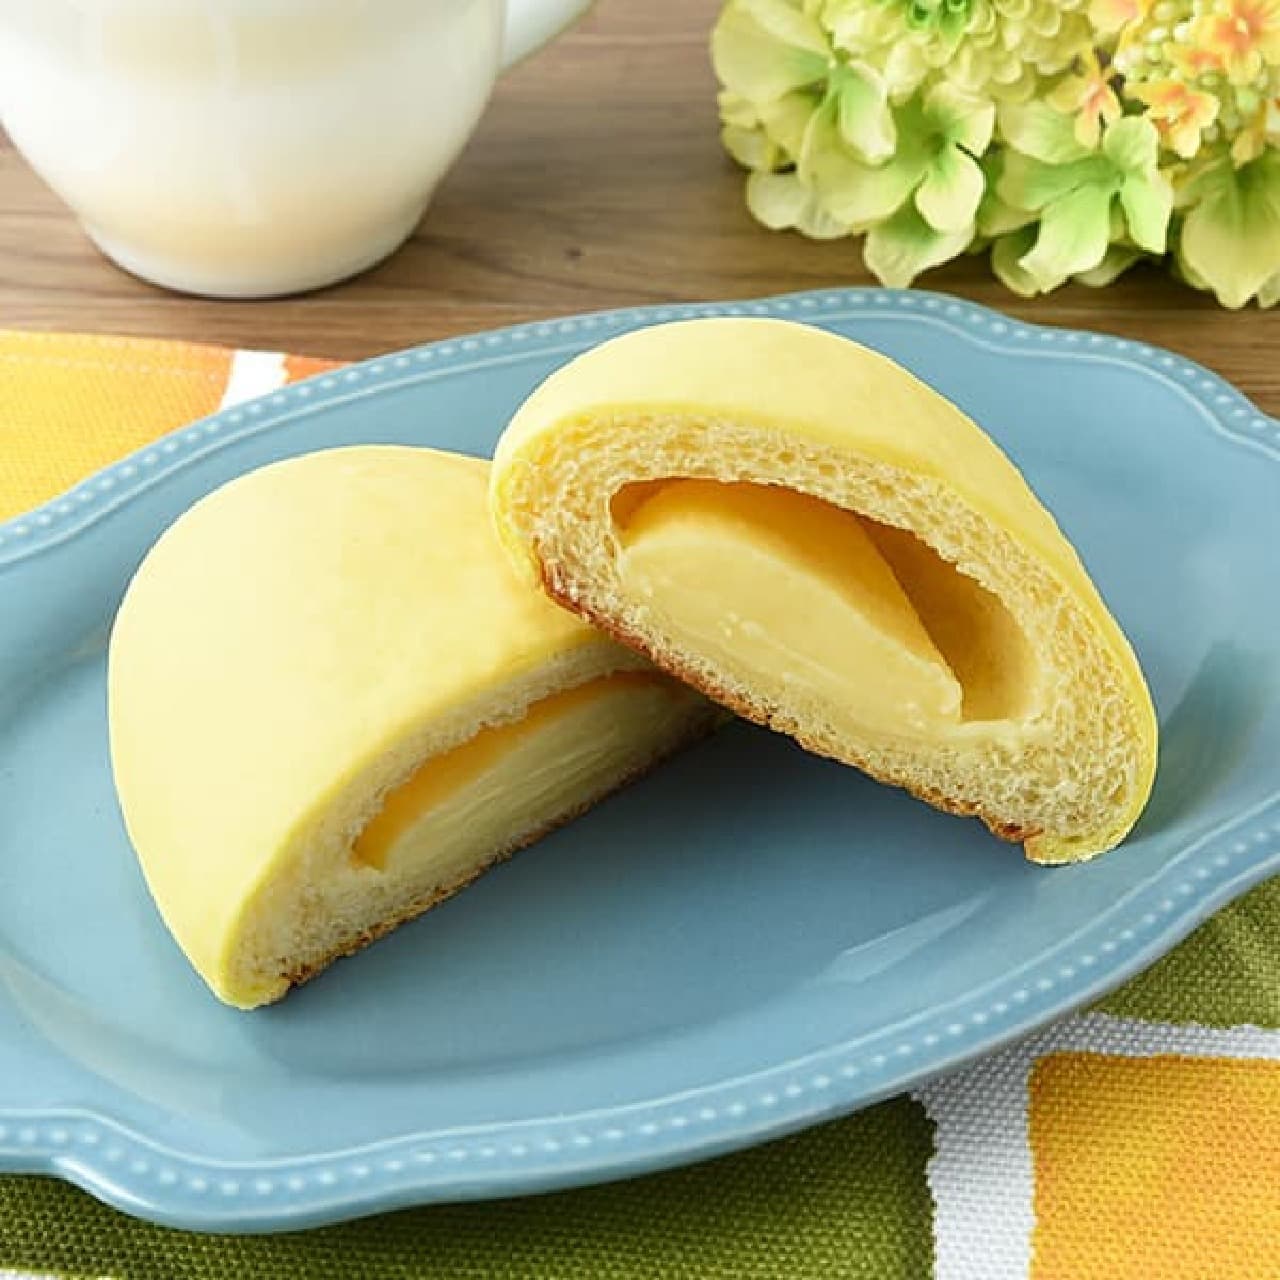 FamilyMart "Setouchi Lemon Bread with Mochi Texture